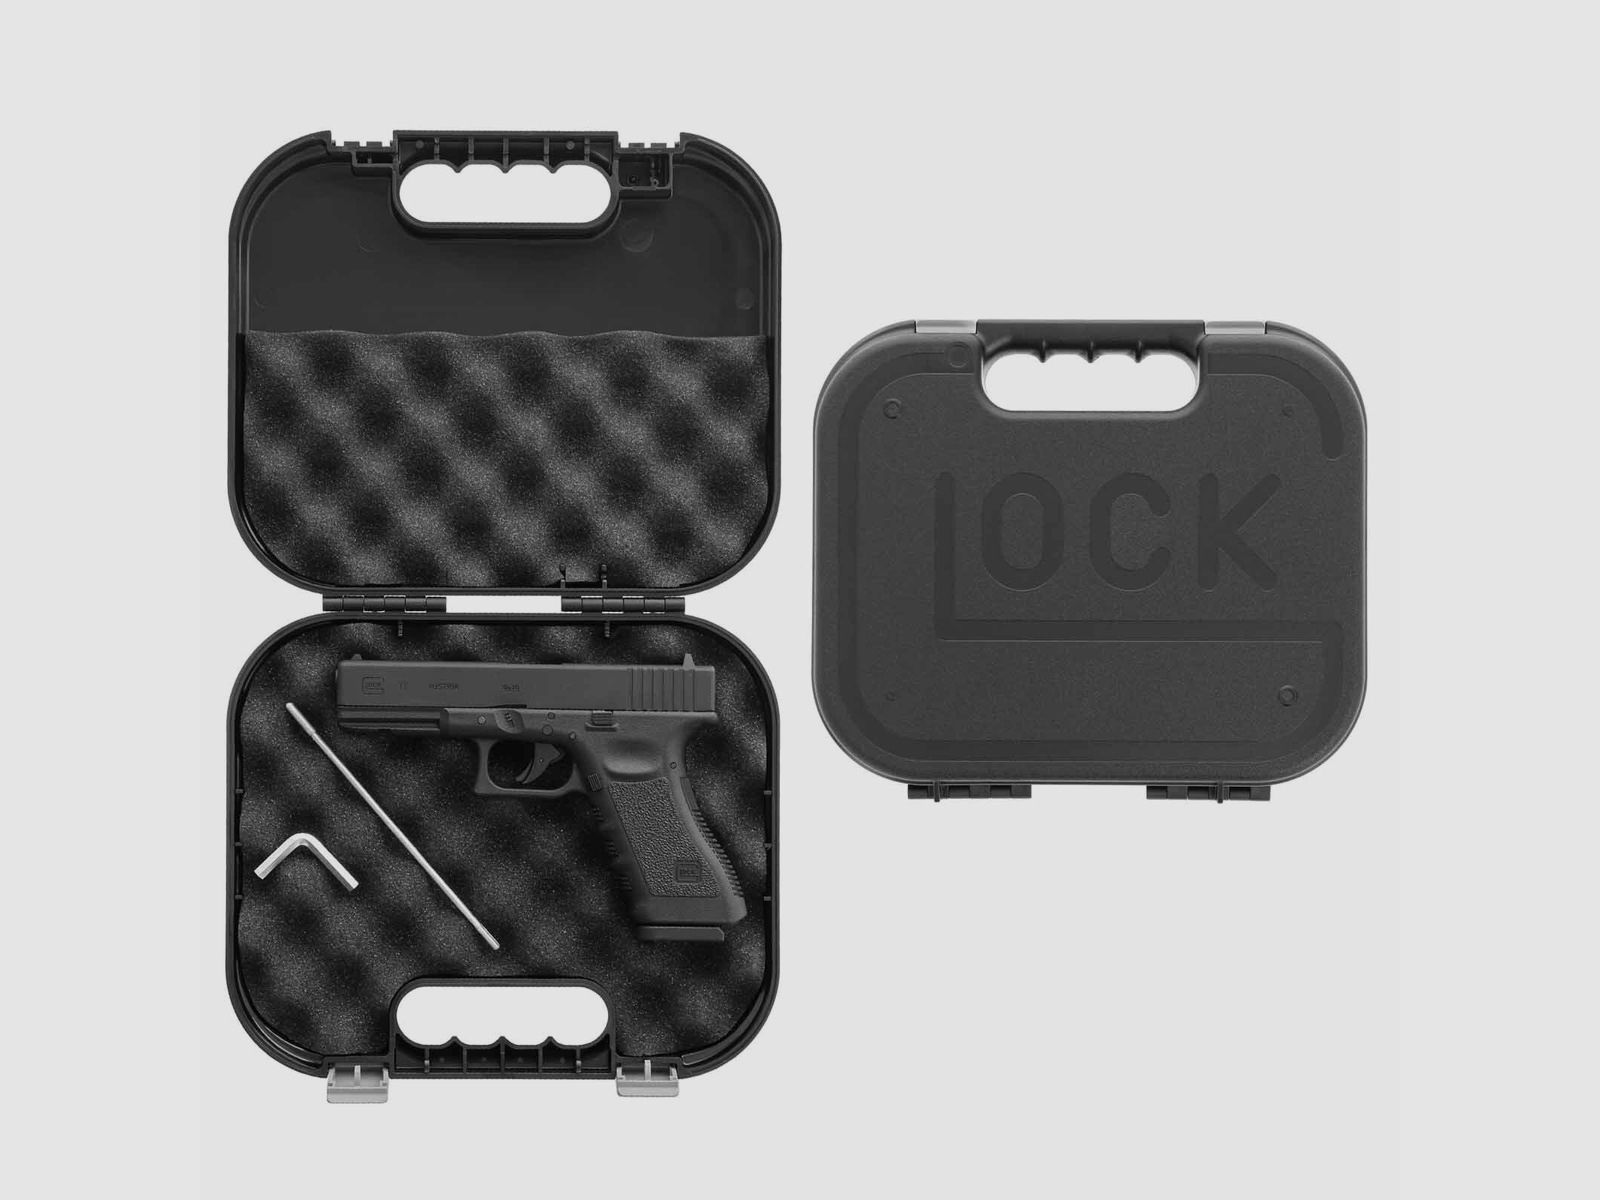 Glock 17 Co2-Pistole Kaliber 4,5 mm Stahl BB / Diabolo Blowback (P18)